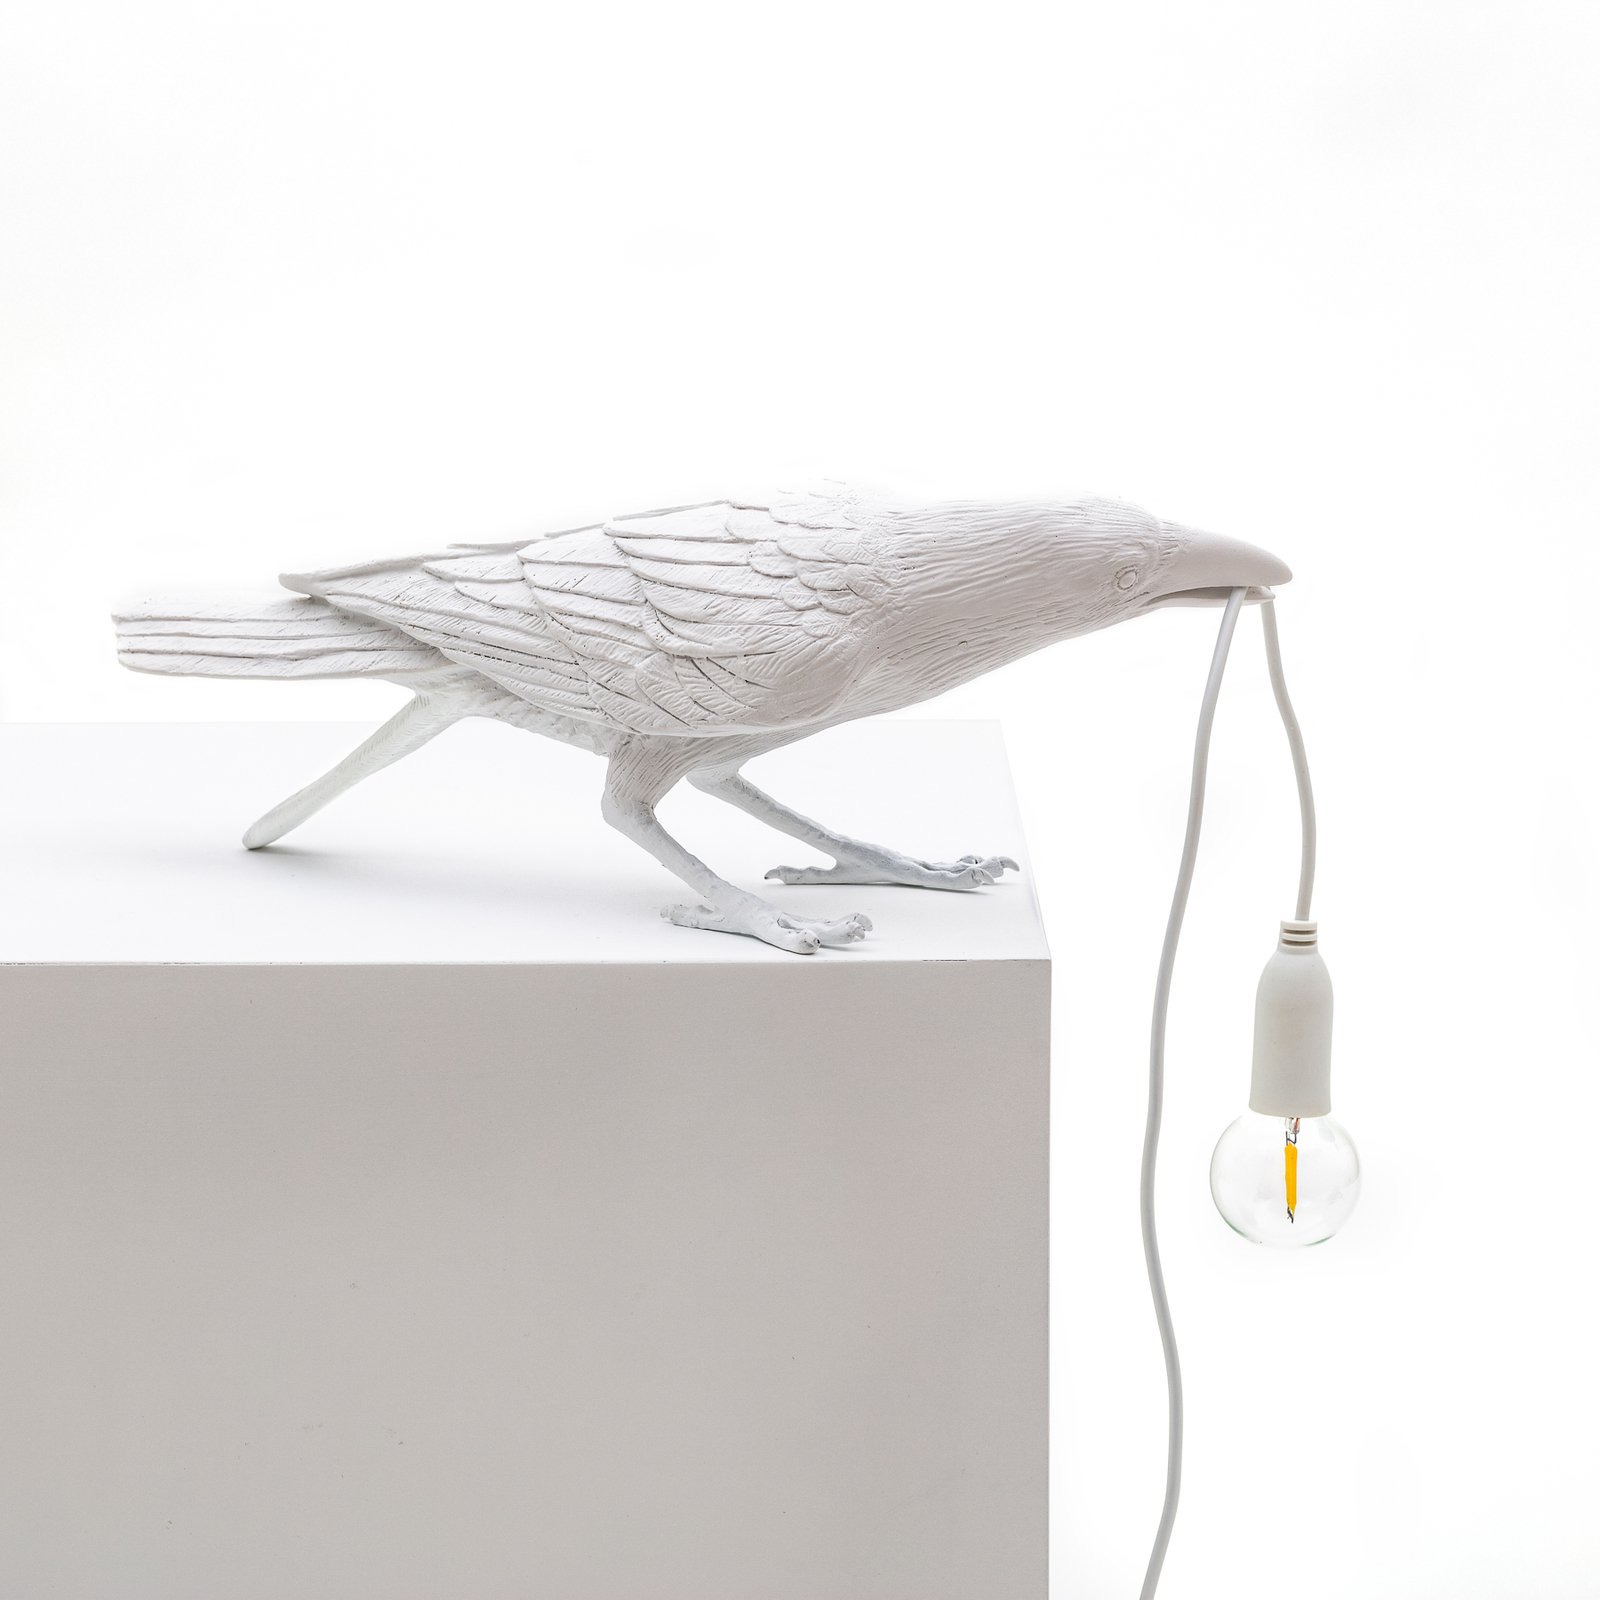 SELETTI Bird Lamp LED-Dekoleuchte, spielend, weiß